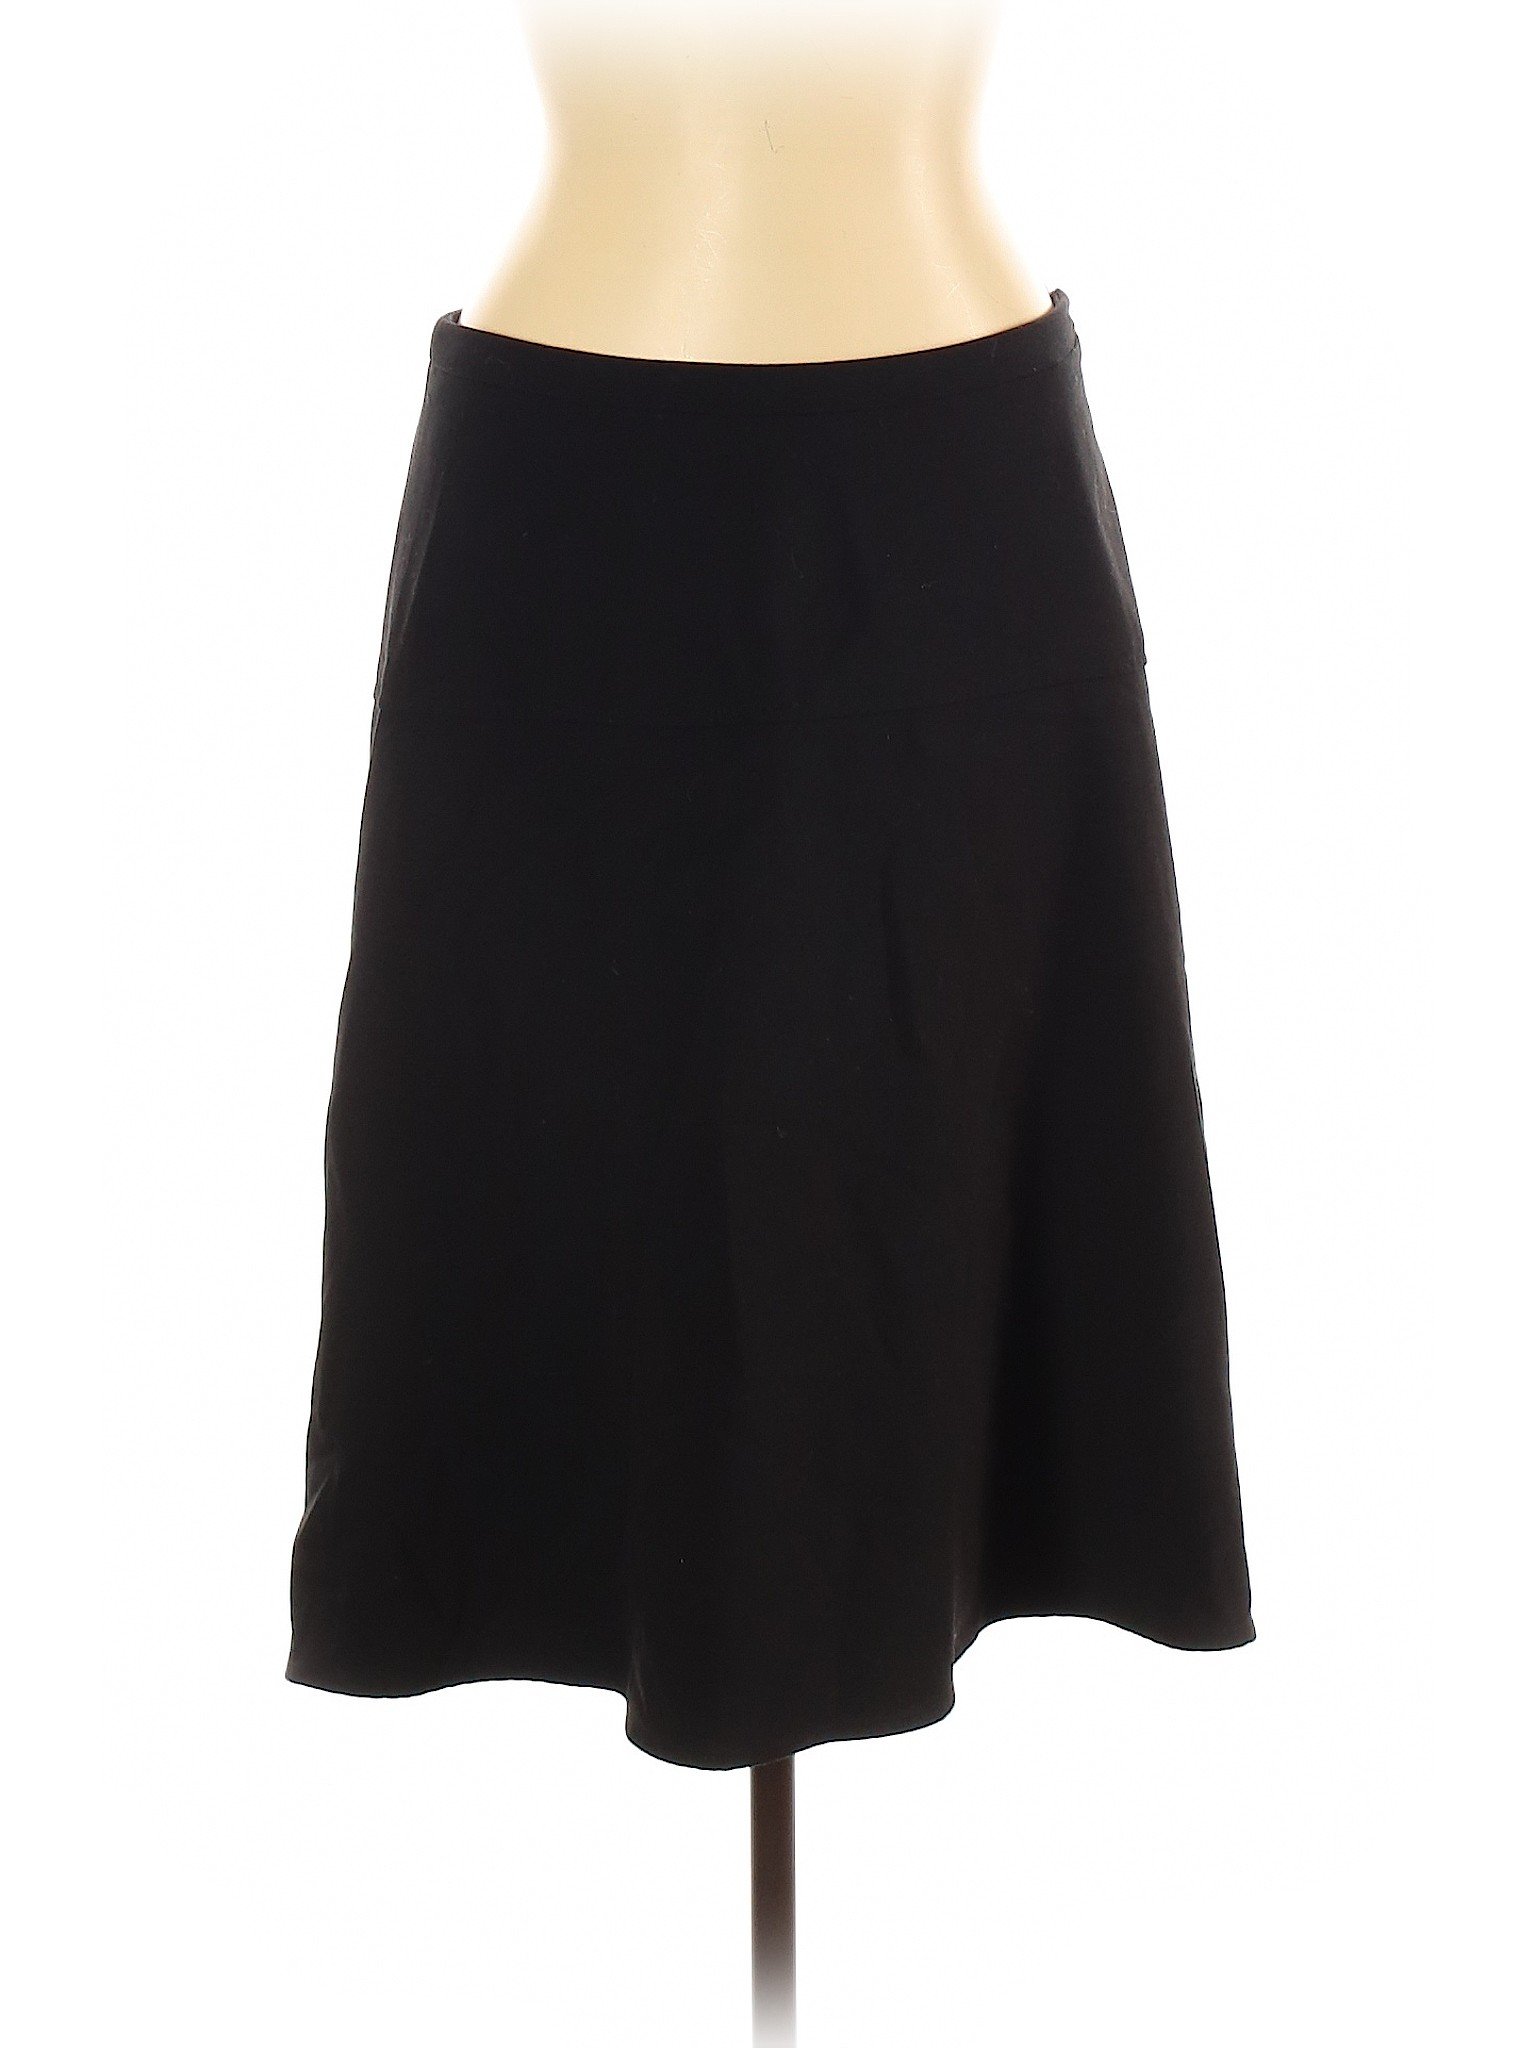 Paniz Women Black Casual Skirt 12 | eBay